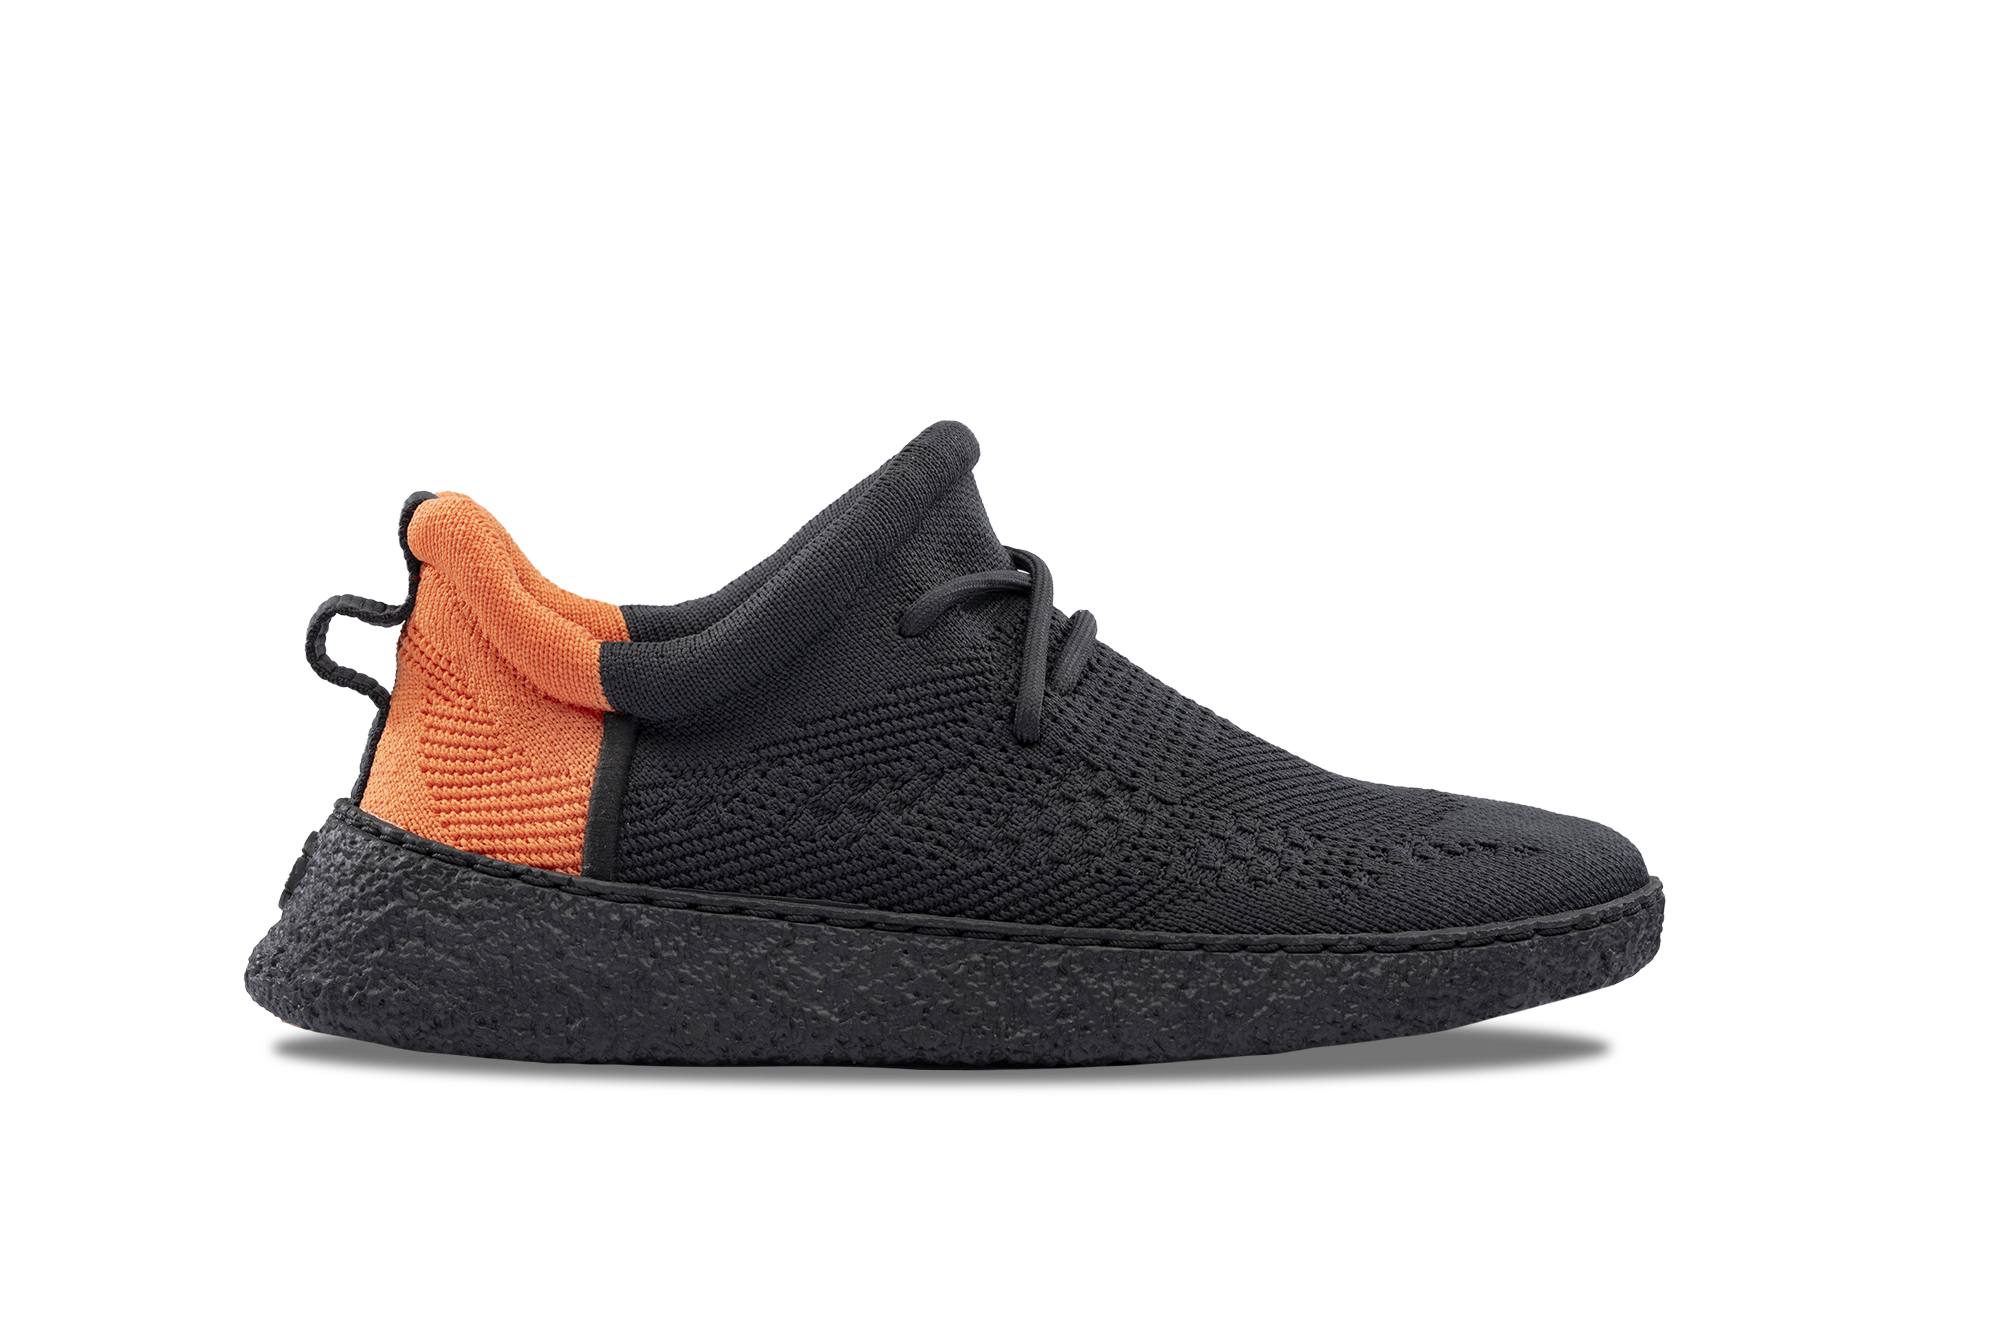 Baliston Smart Shoe Black/Orange right side view